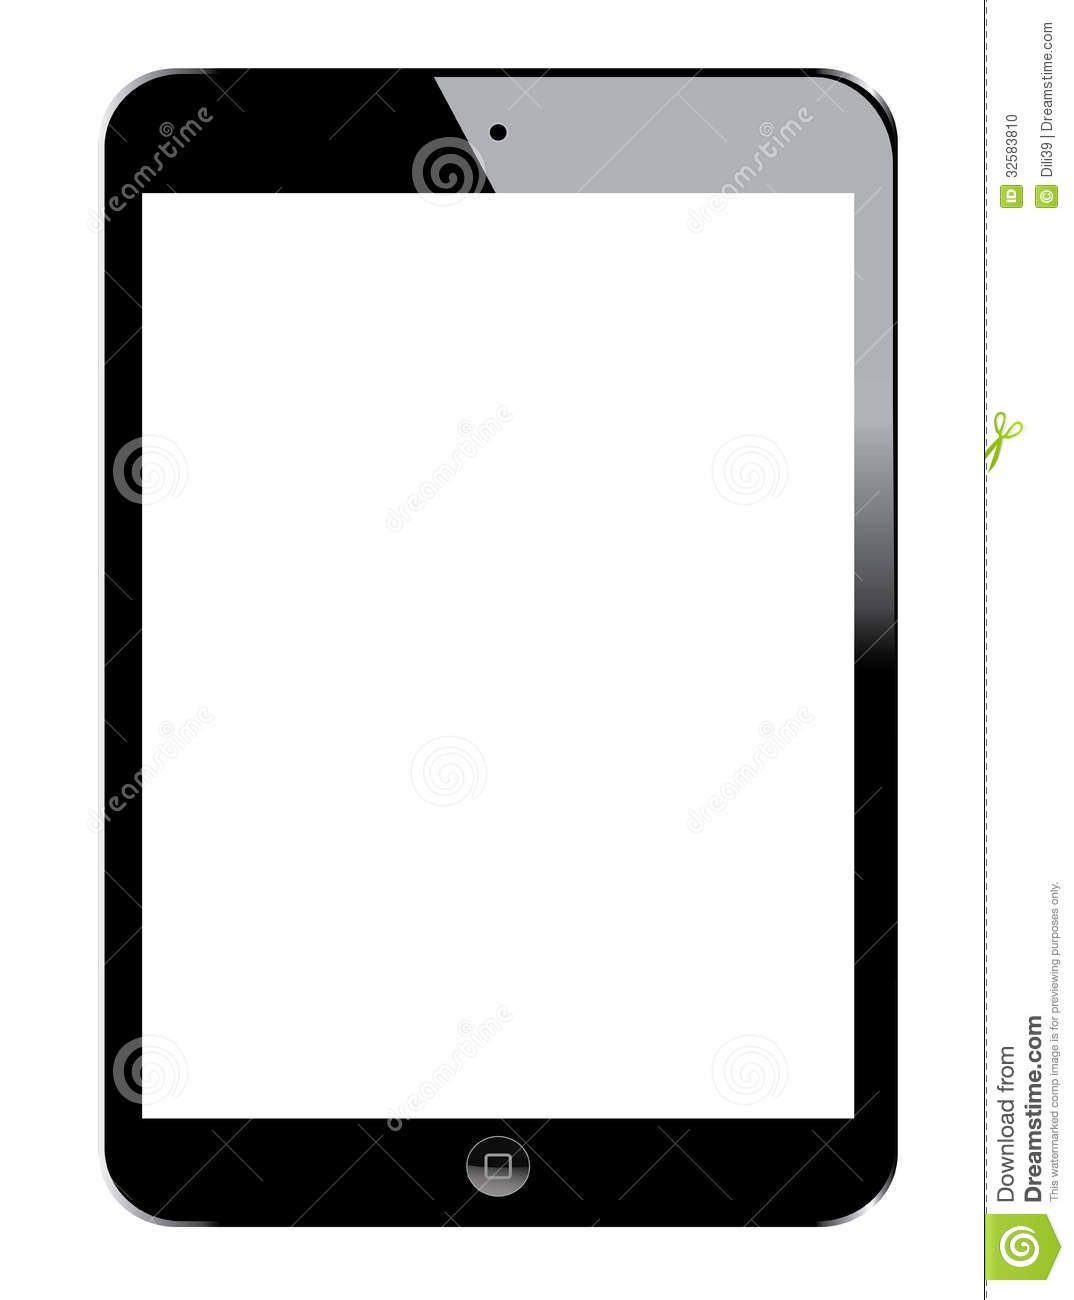 iPad Vector Illustration